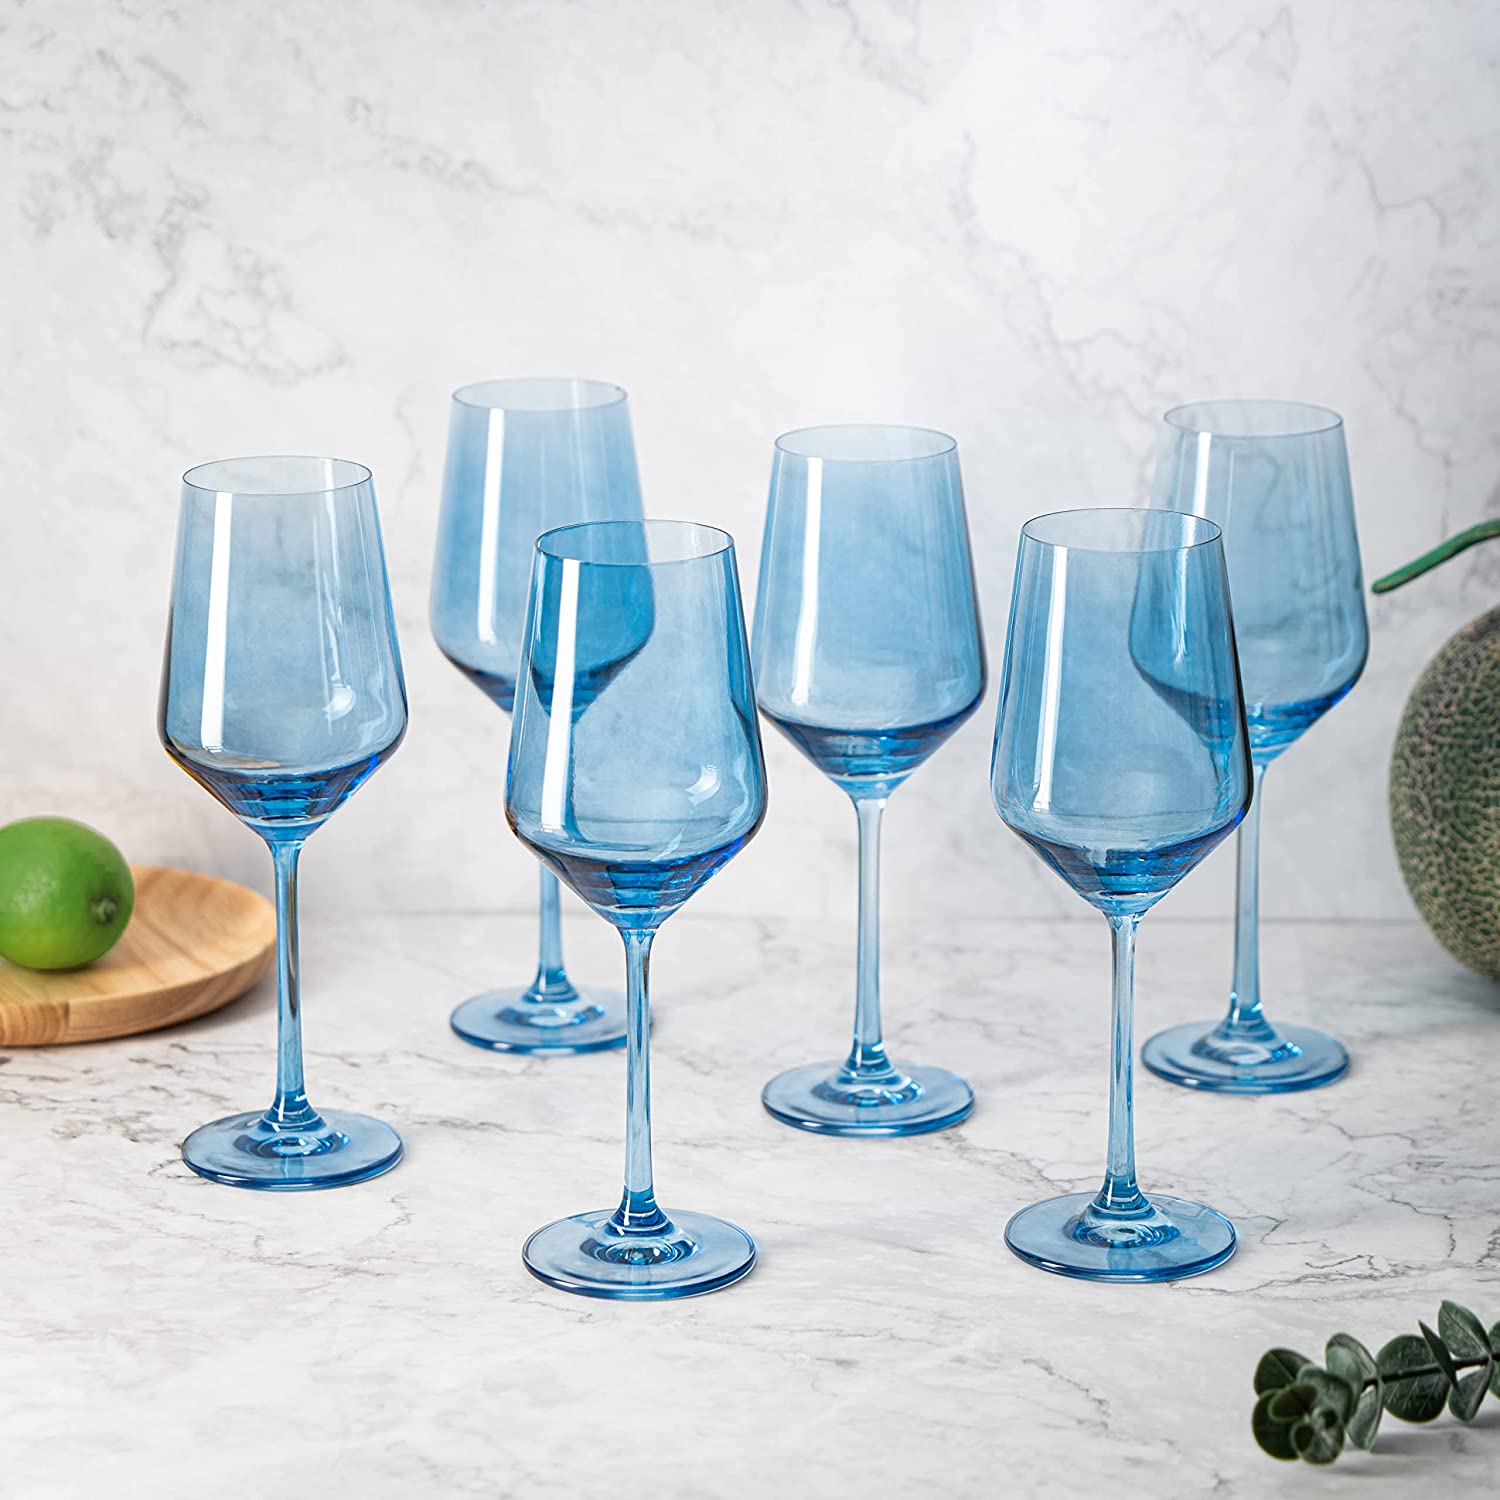 Colored Wine Glass Set,12 oz Glasses Set of 6, Unique Italian Style Ta –  The Wine Savant